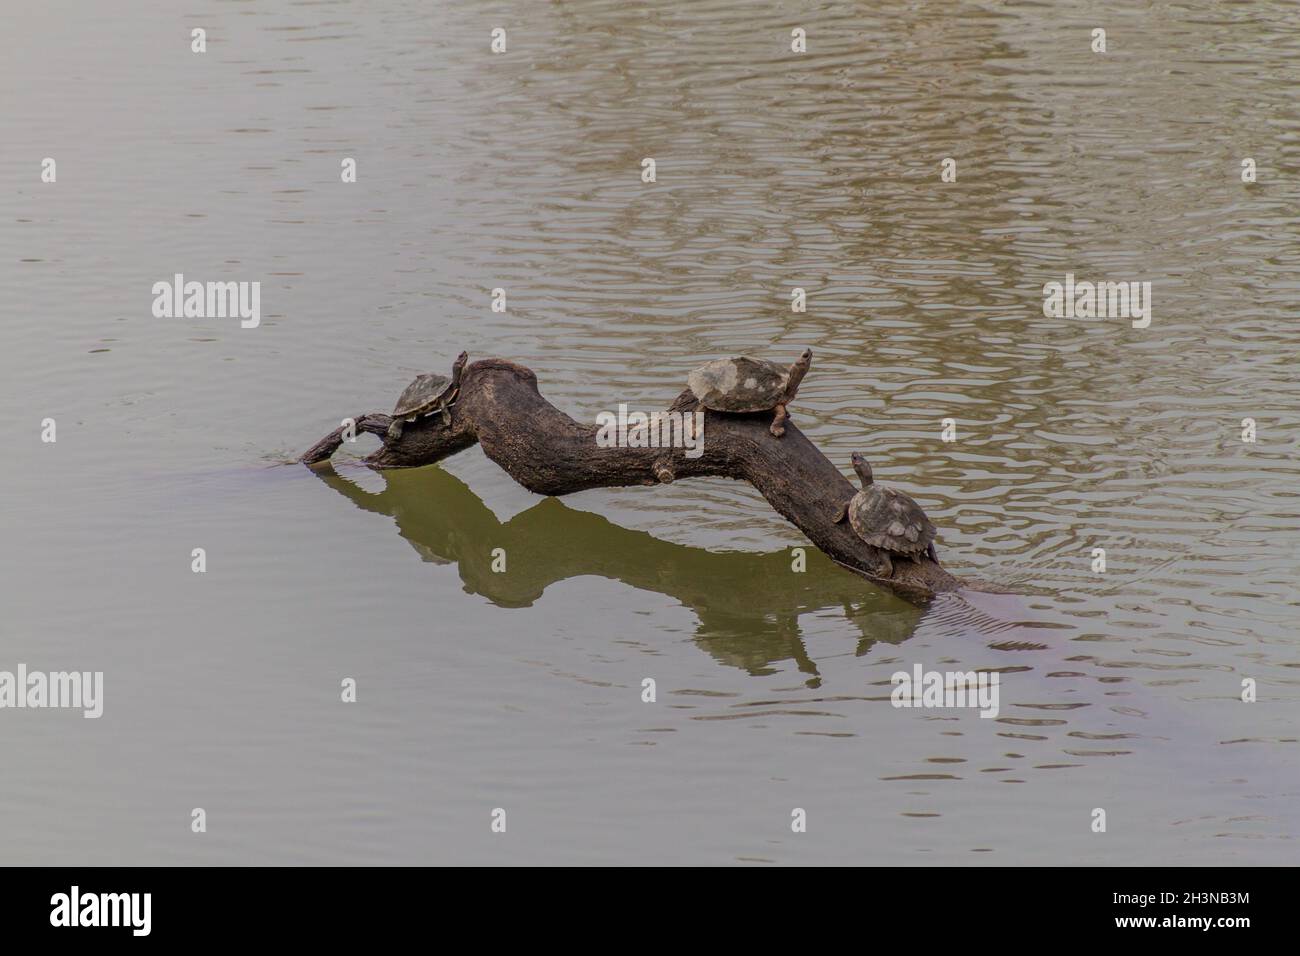 Turtles in Kaziranga national park, India Stock Photo